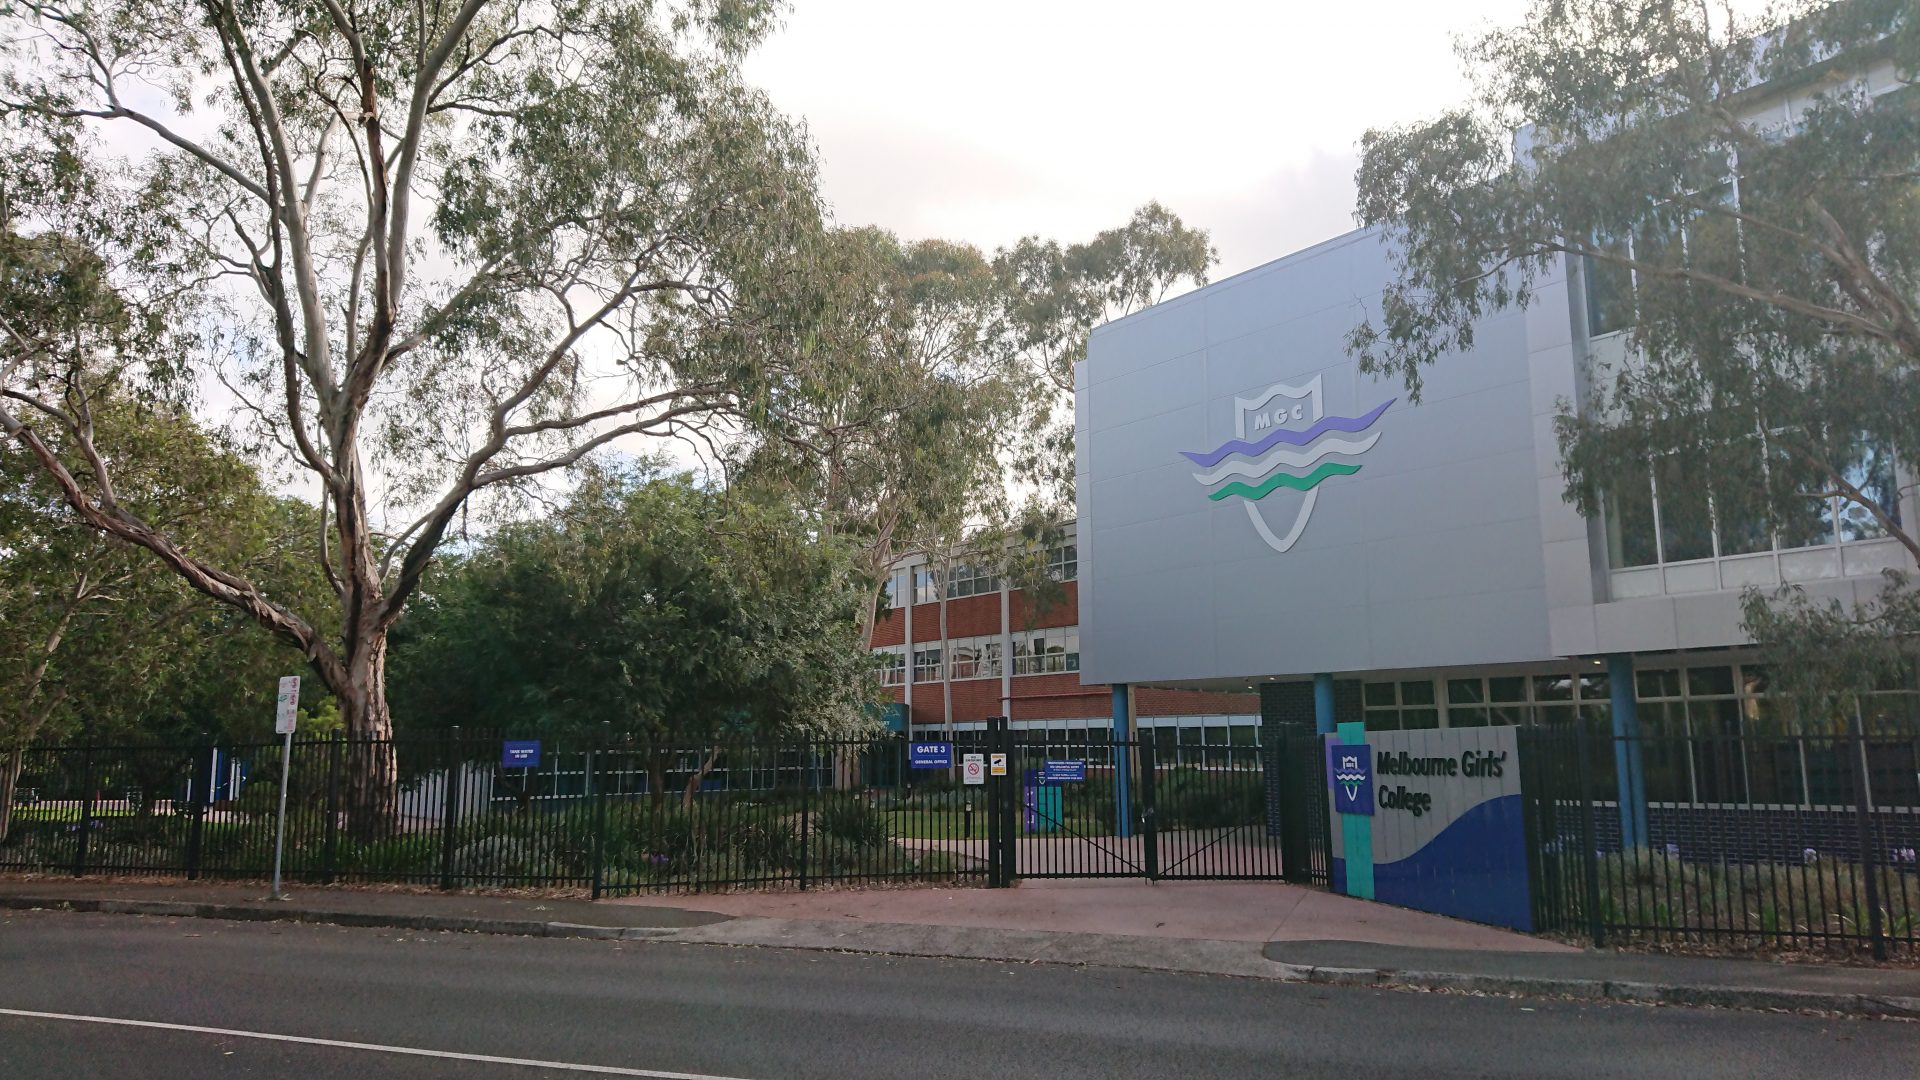 Melbourne Girls' College